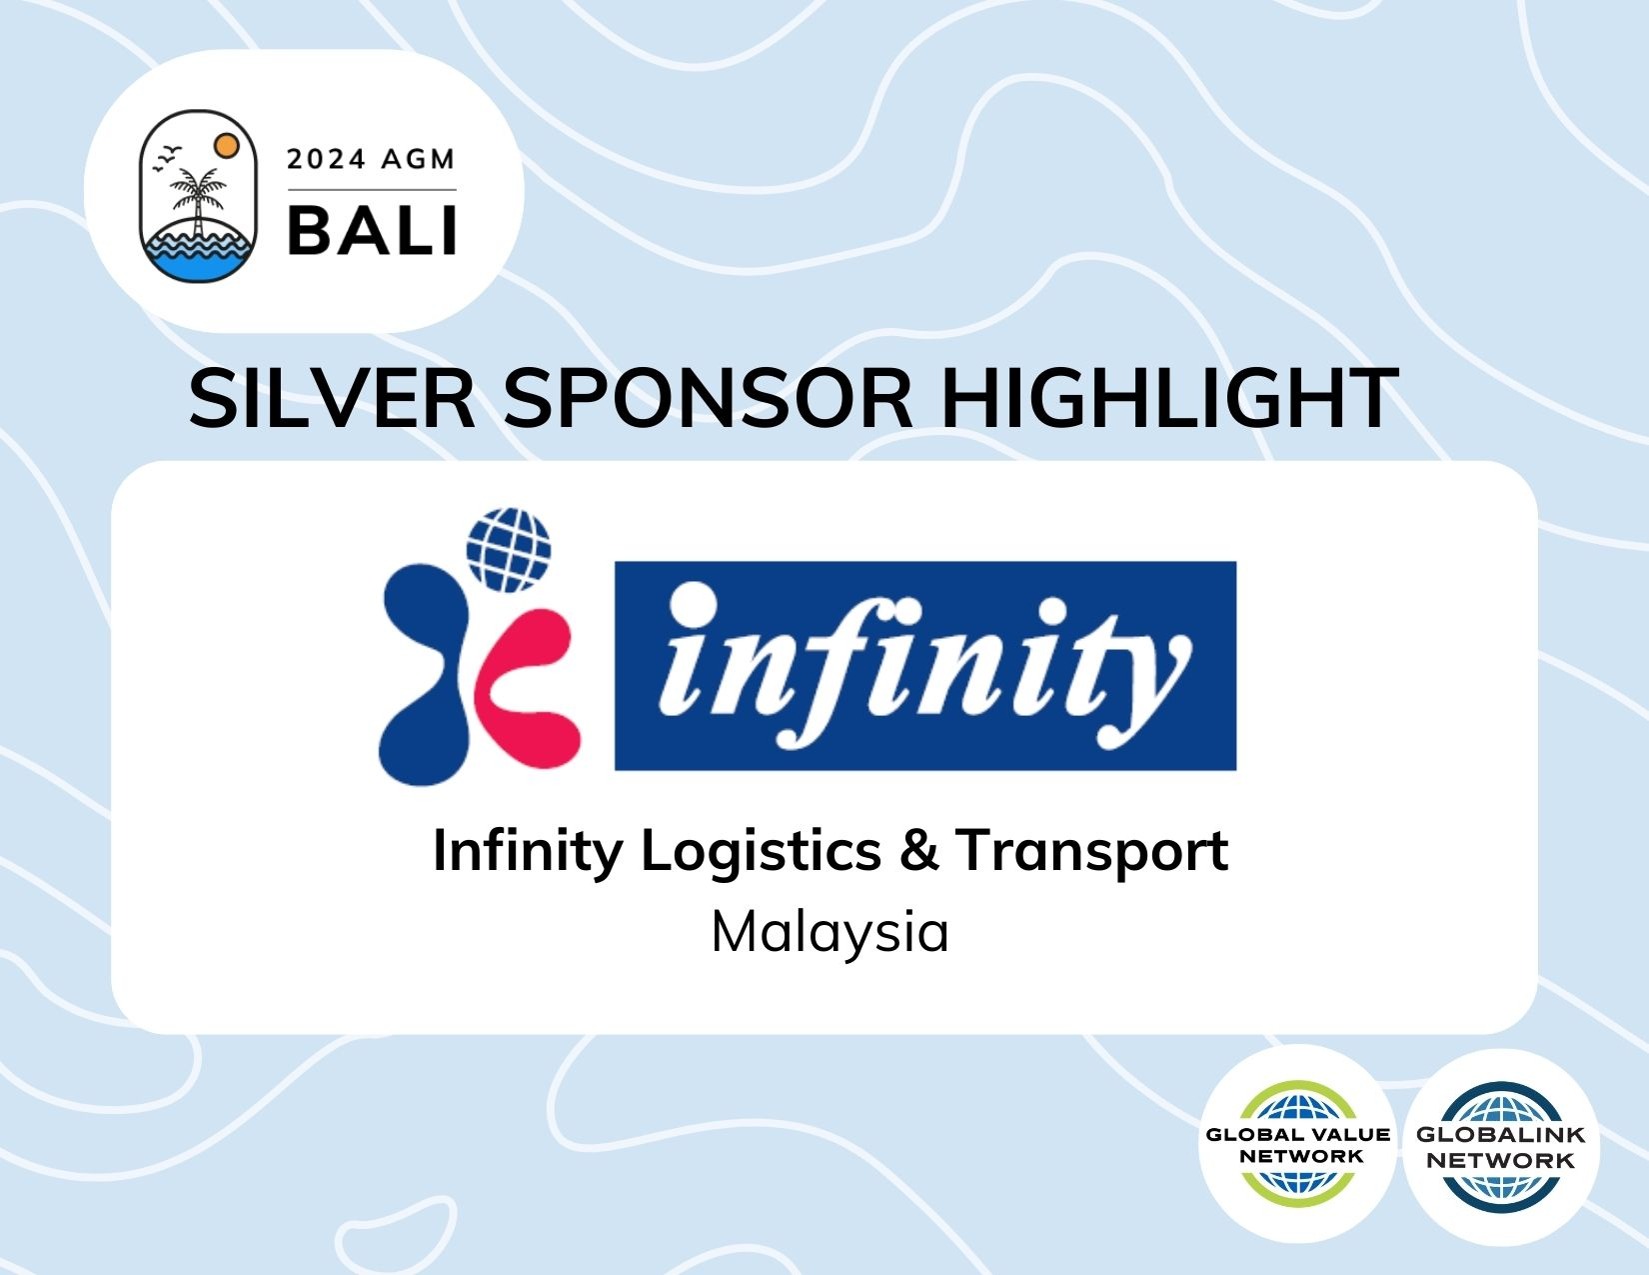 2024 Silver Sponsor Highlight: Infinity Logistics & Transport - Malaysia